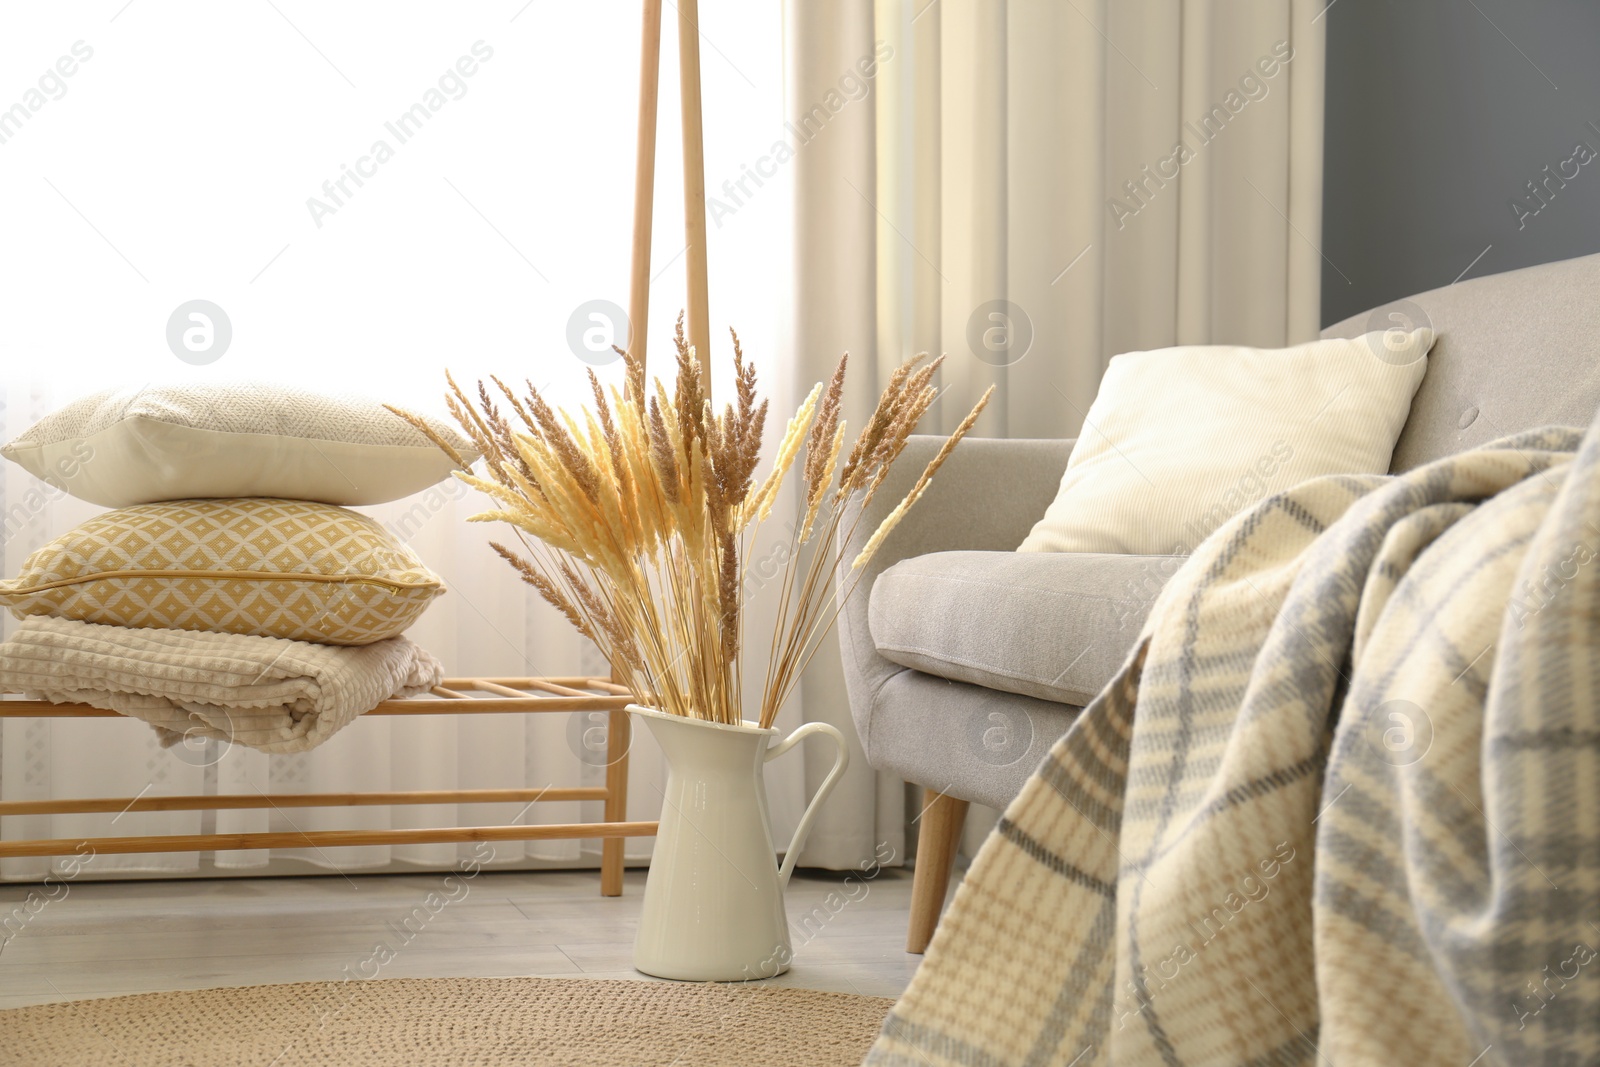 Photo of Vase of dry plants in living room. Interior design